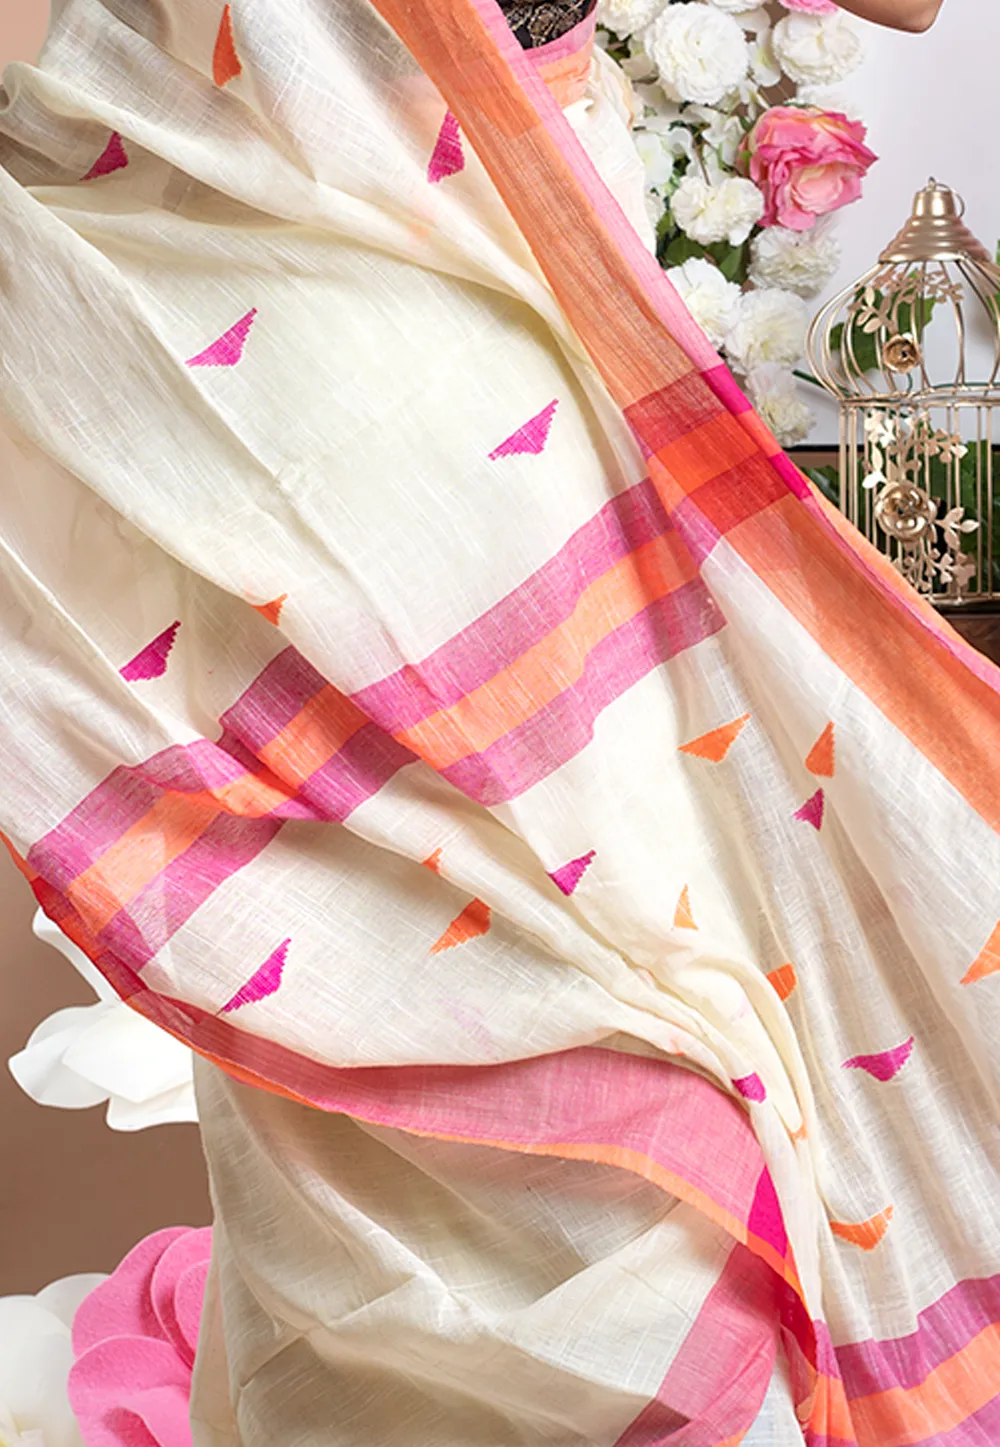 ivory handloom saree with multicolor pyramid motifs 6023d582b3e81 1612961154 1